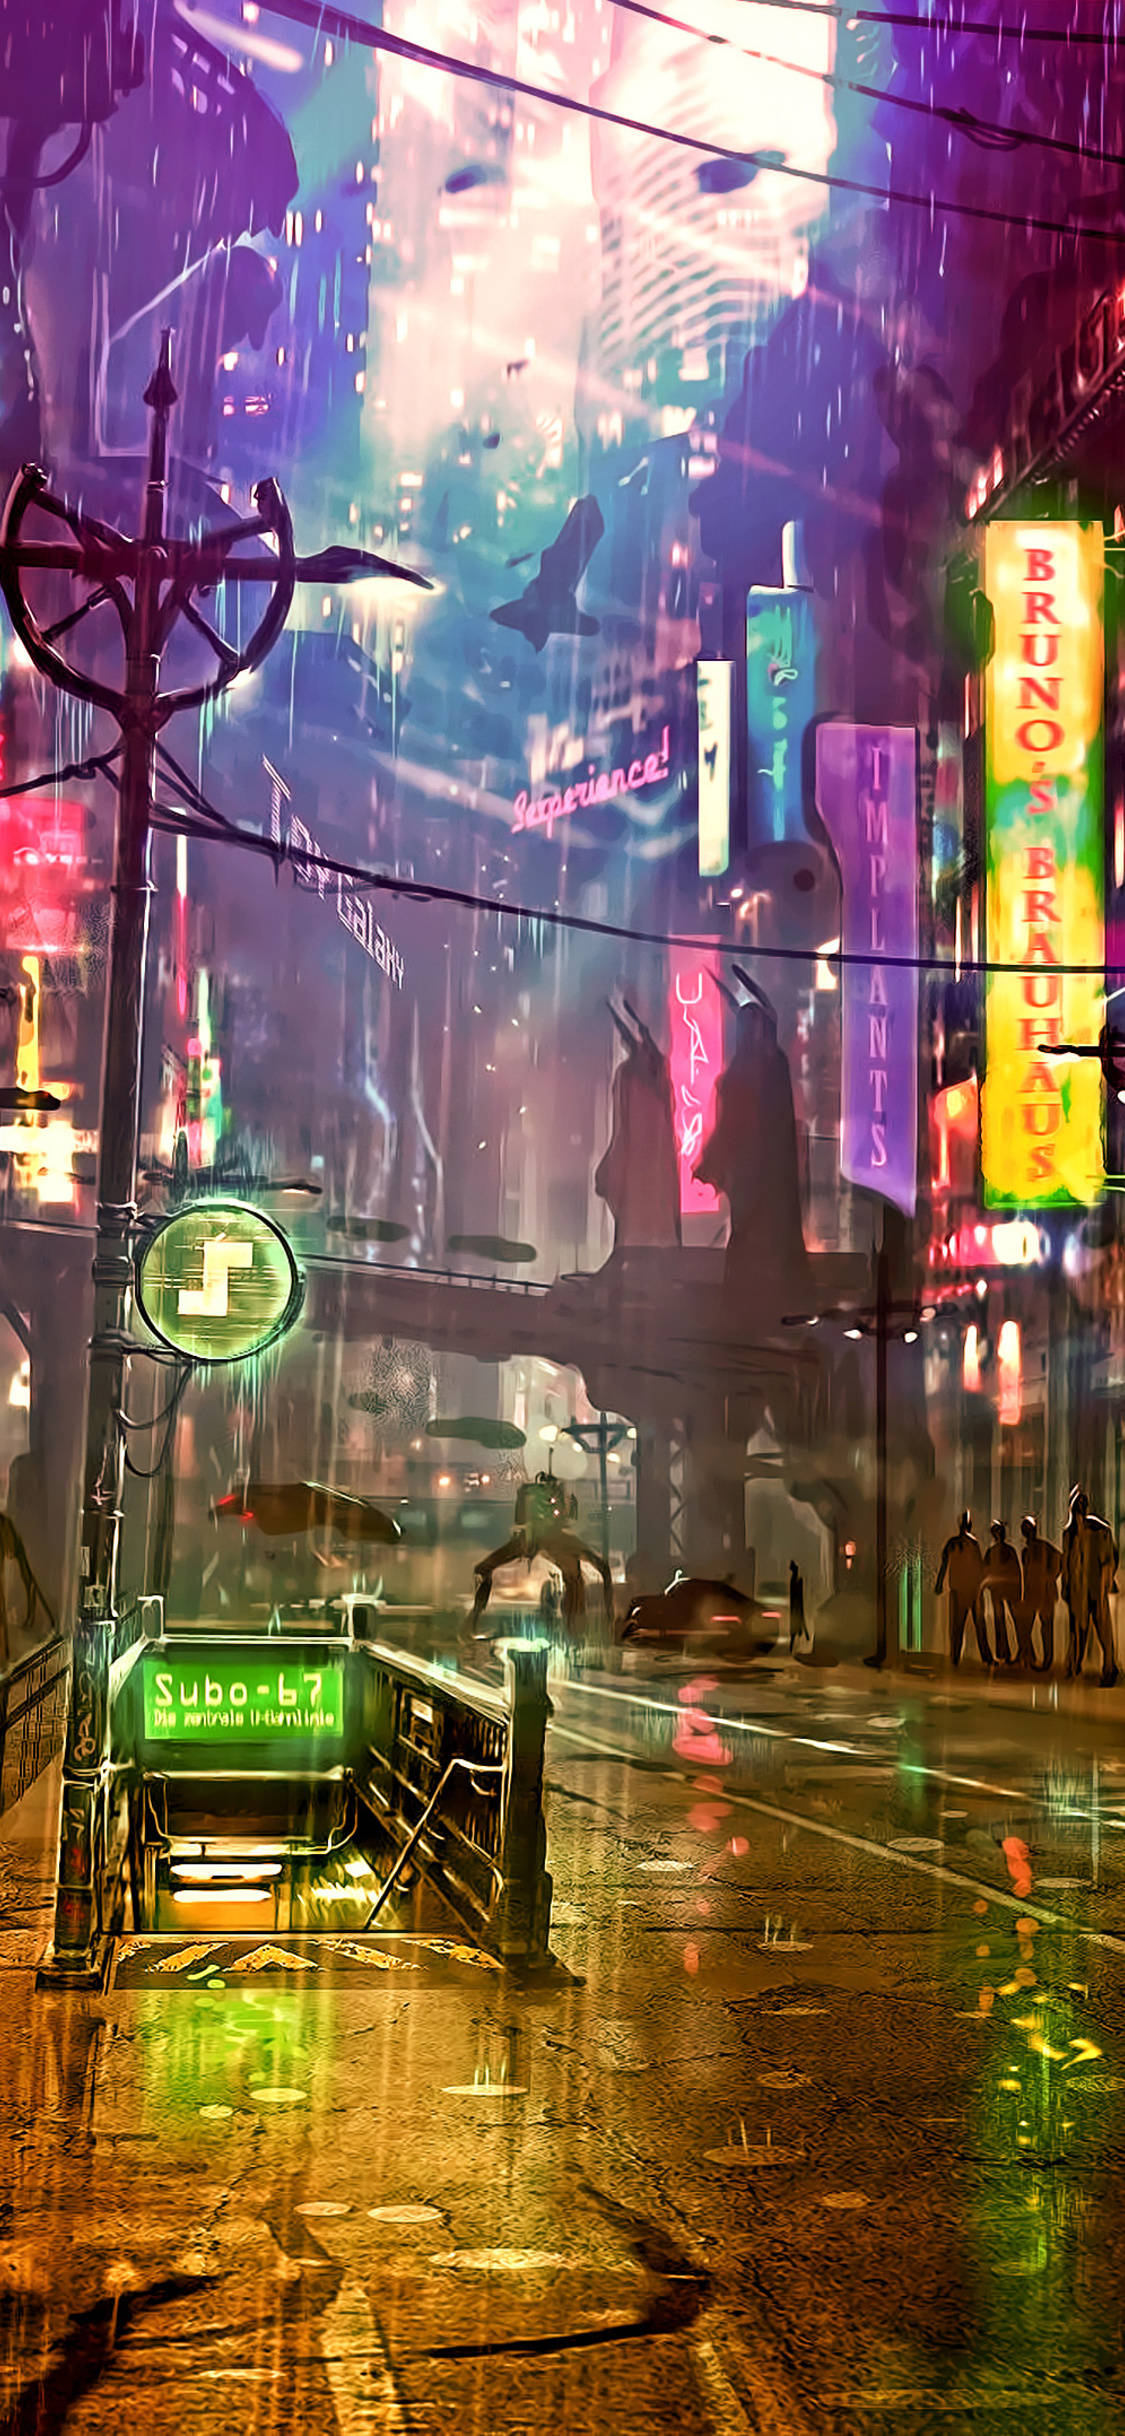 Download Futuristic City Artwork Cyberpunk iPhone X Wallpaper